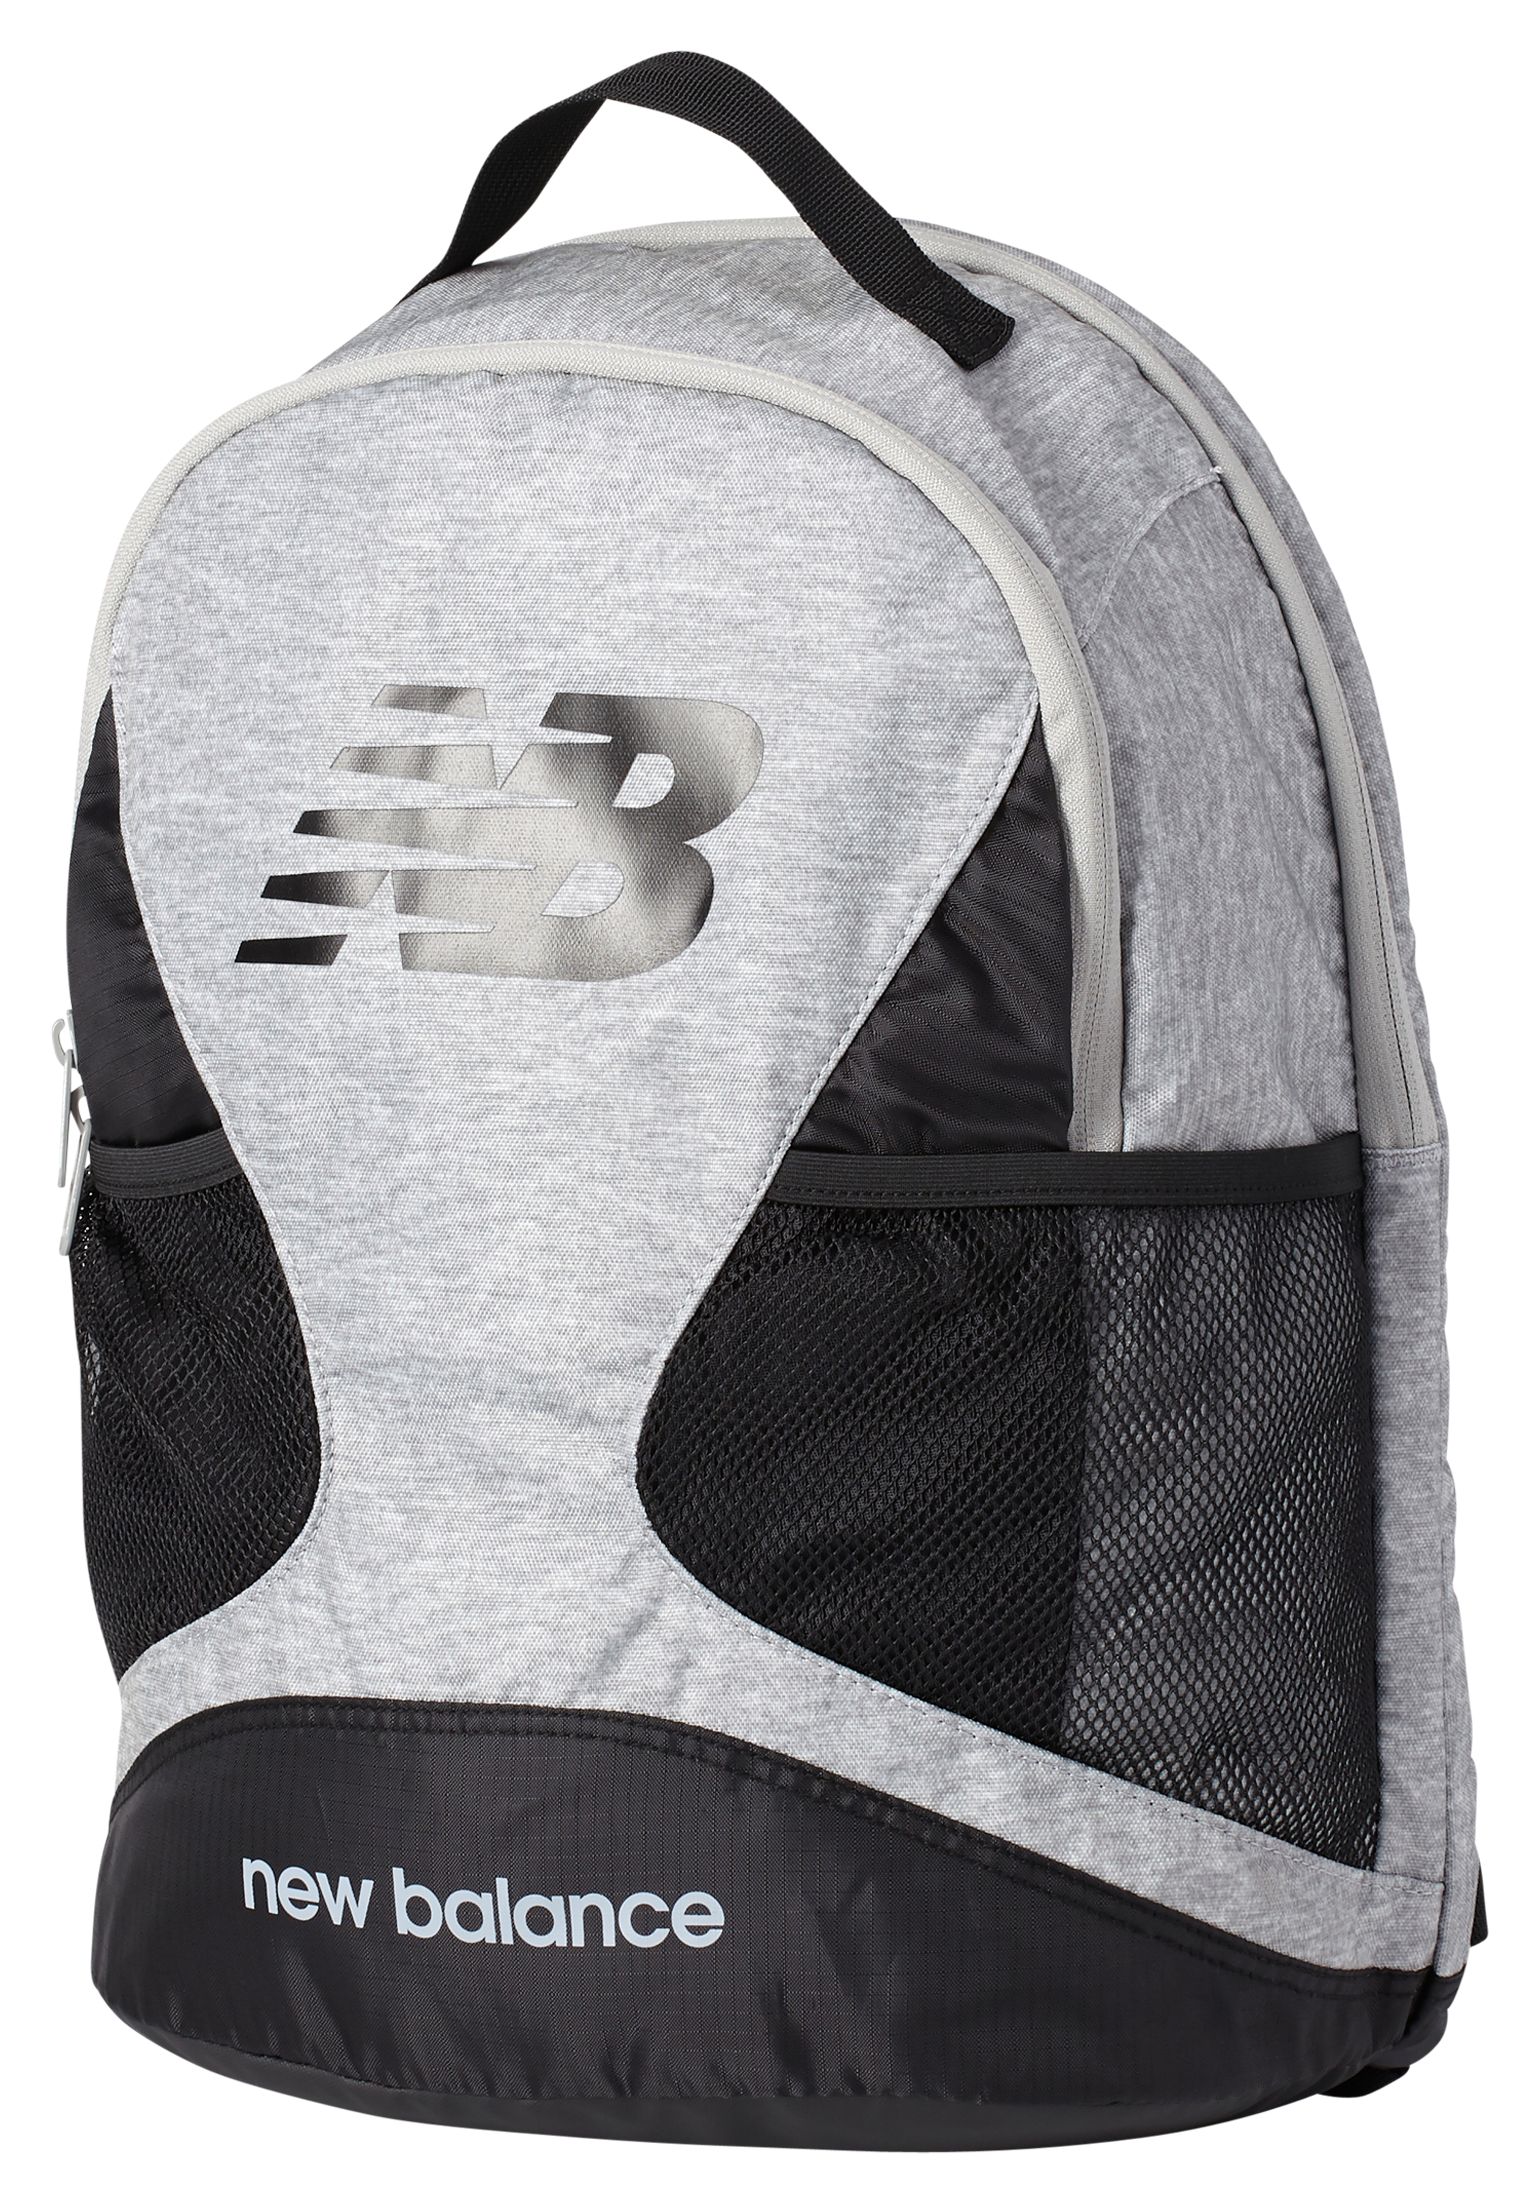 new balance soccer backpack